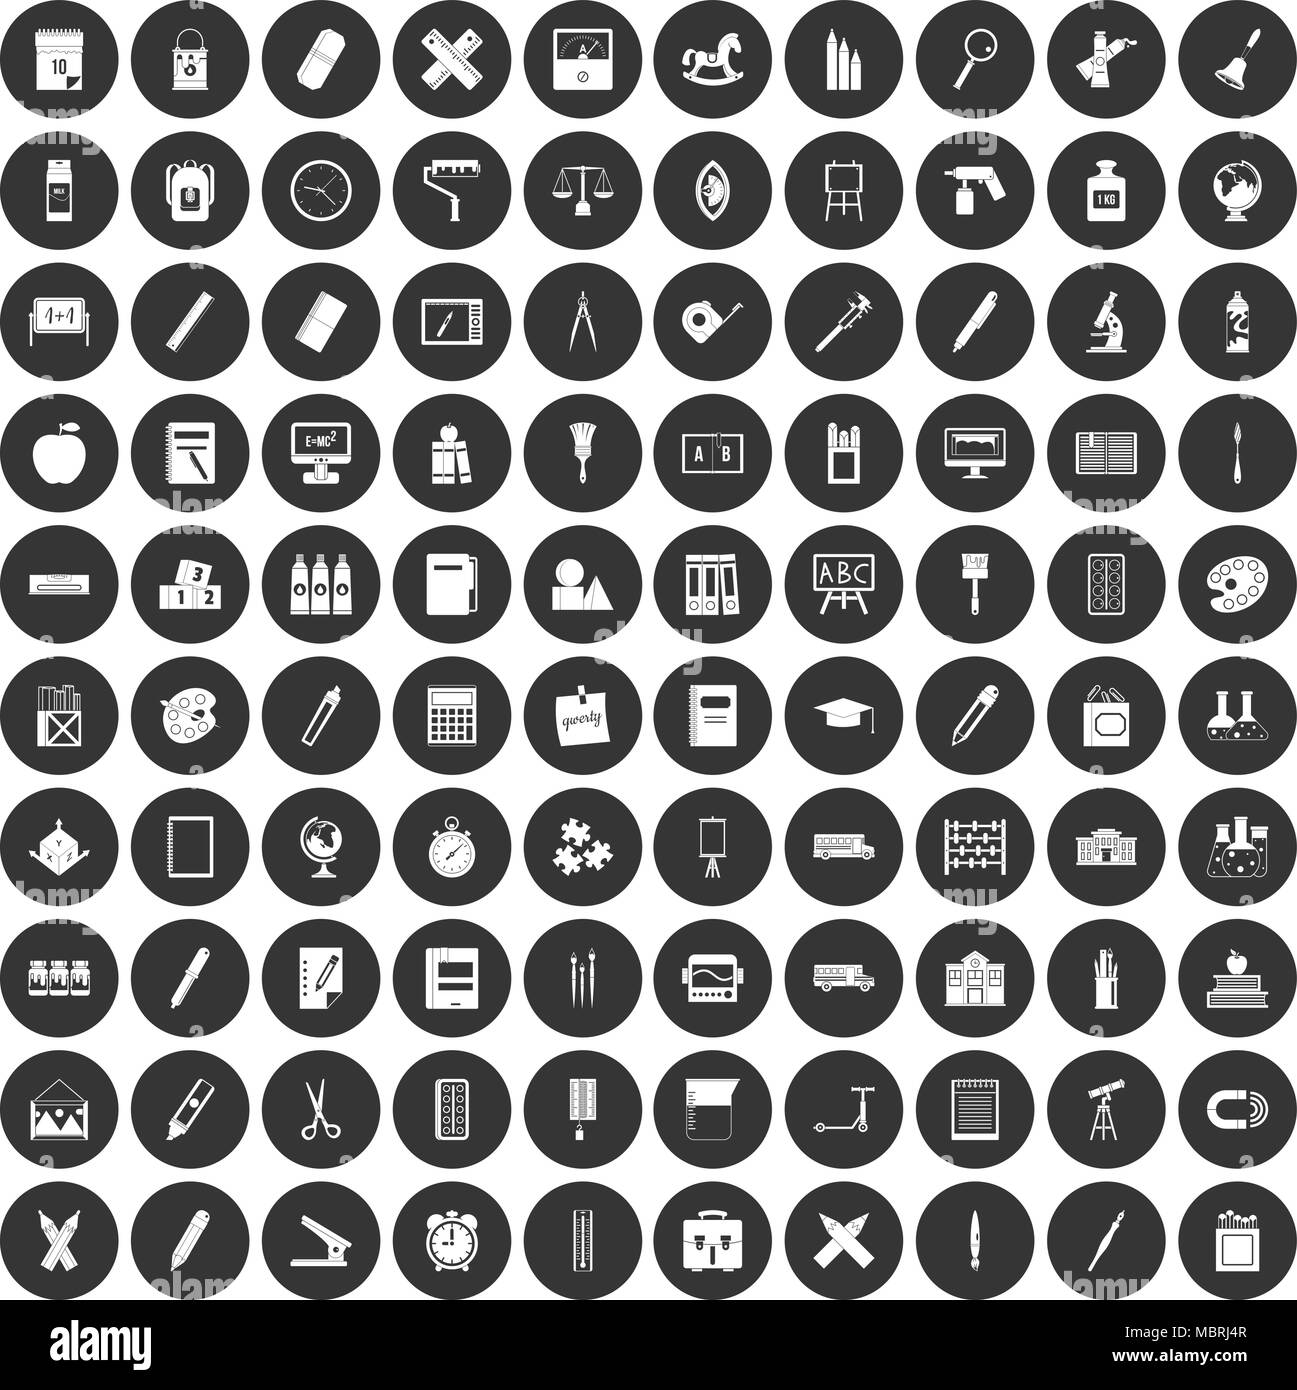 100 Schreibwaren Icons Set schwarz Kreis Stock Vektor